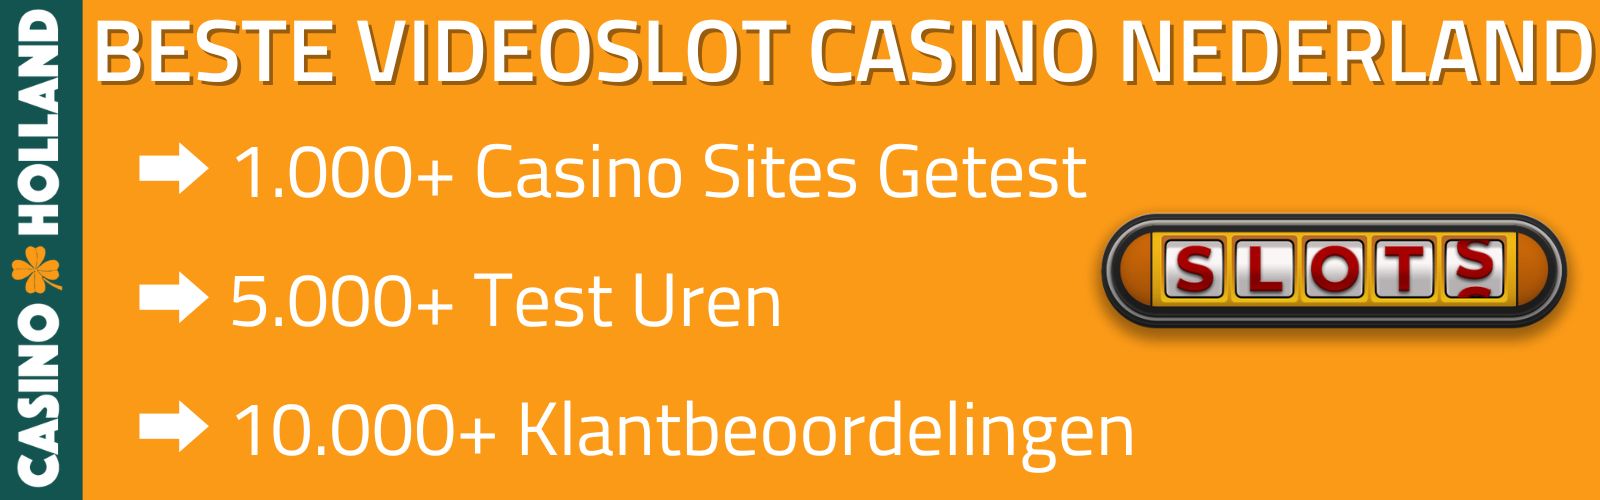 Video slot casino